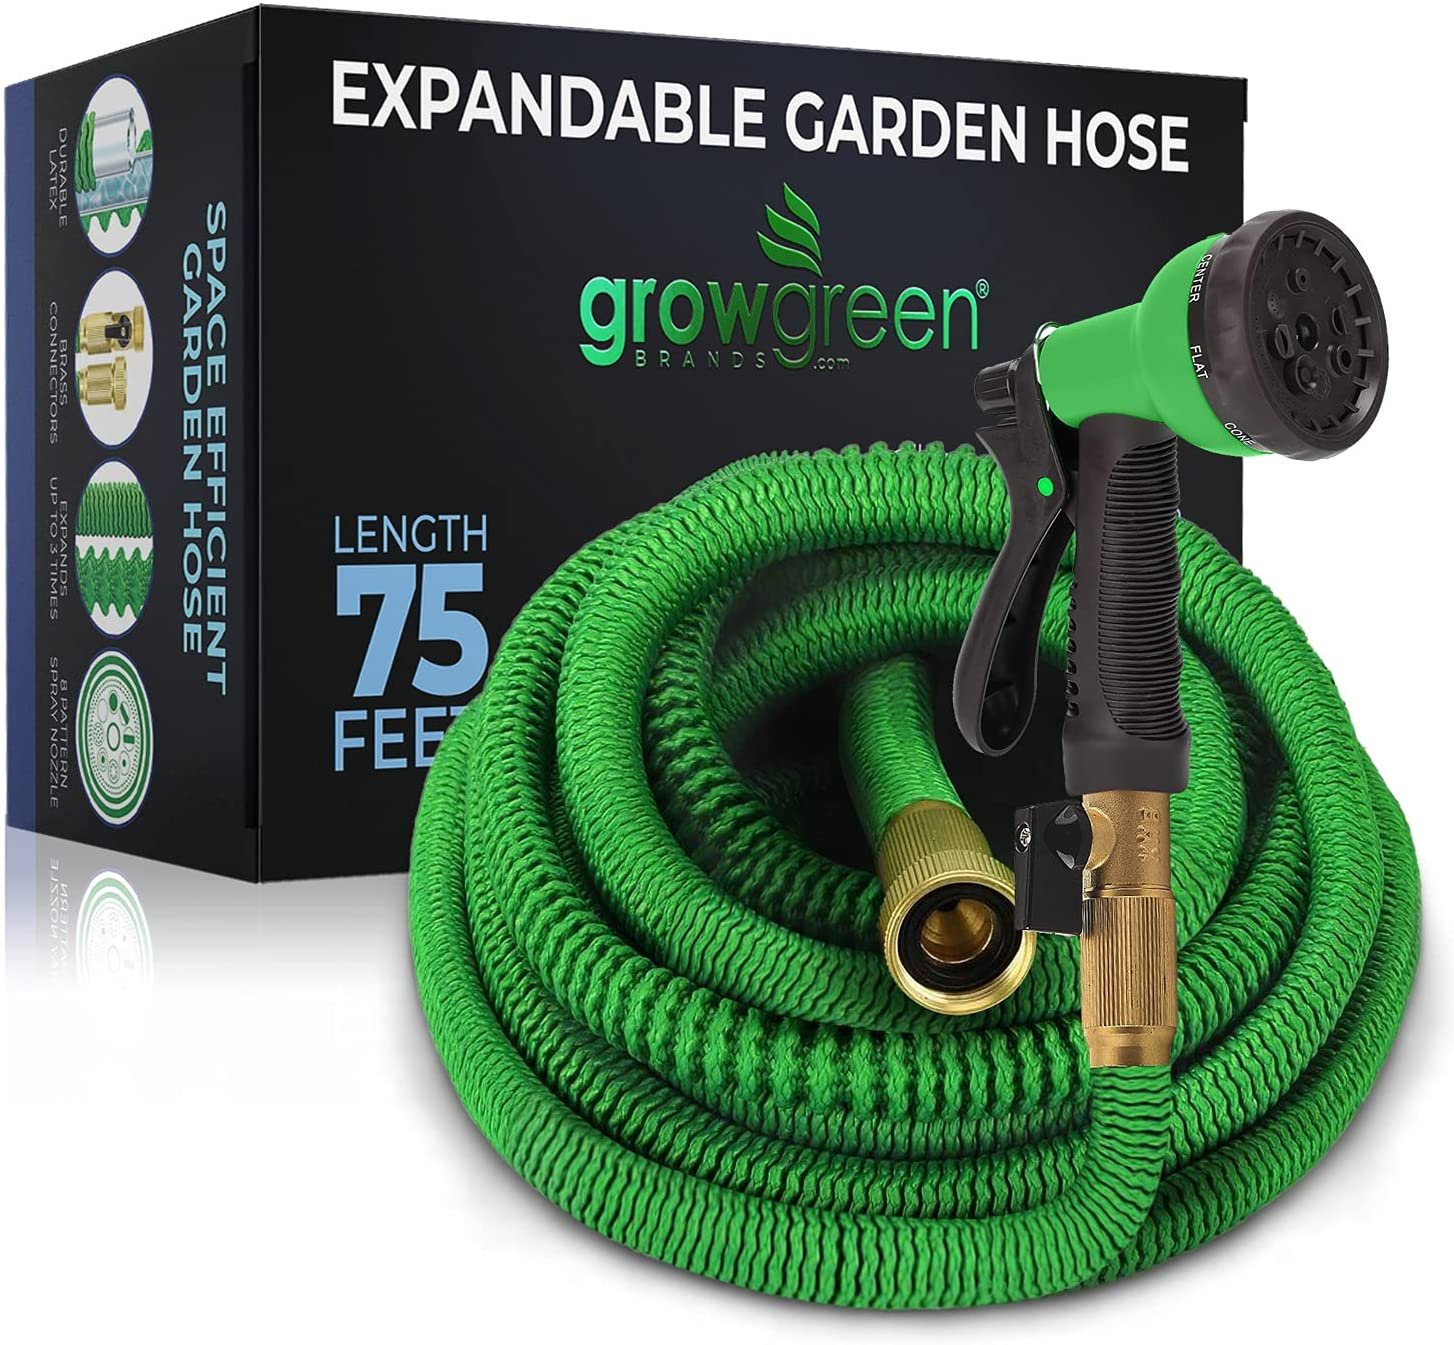 GrowGreen Expandable Garden Hose with Turbo Spray Nozzle, Premium Flexible Hose